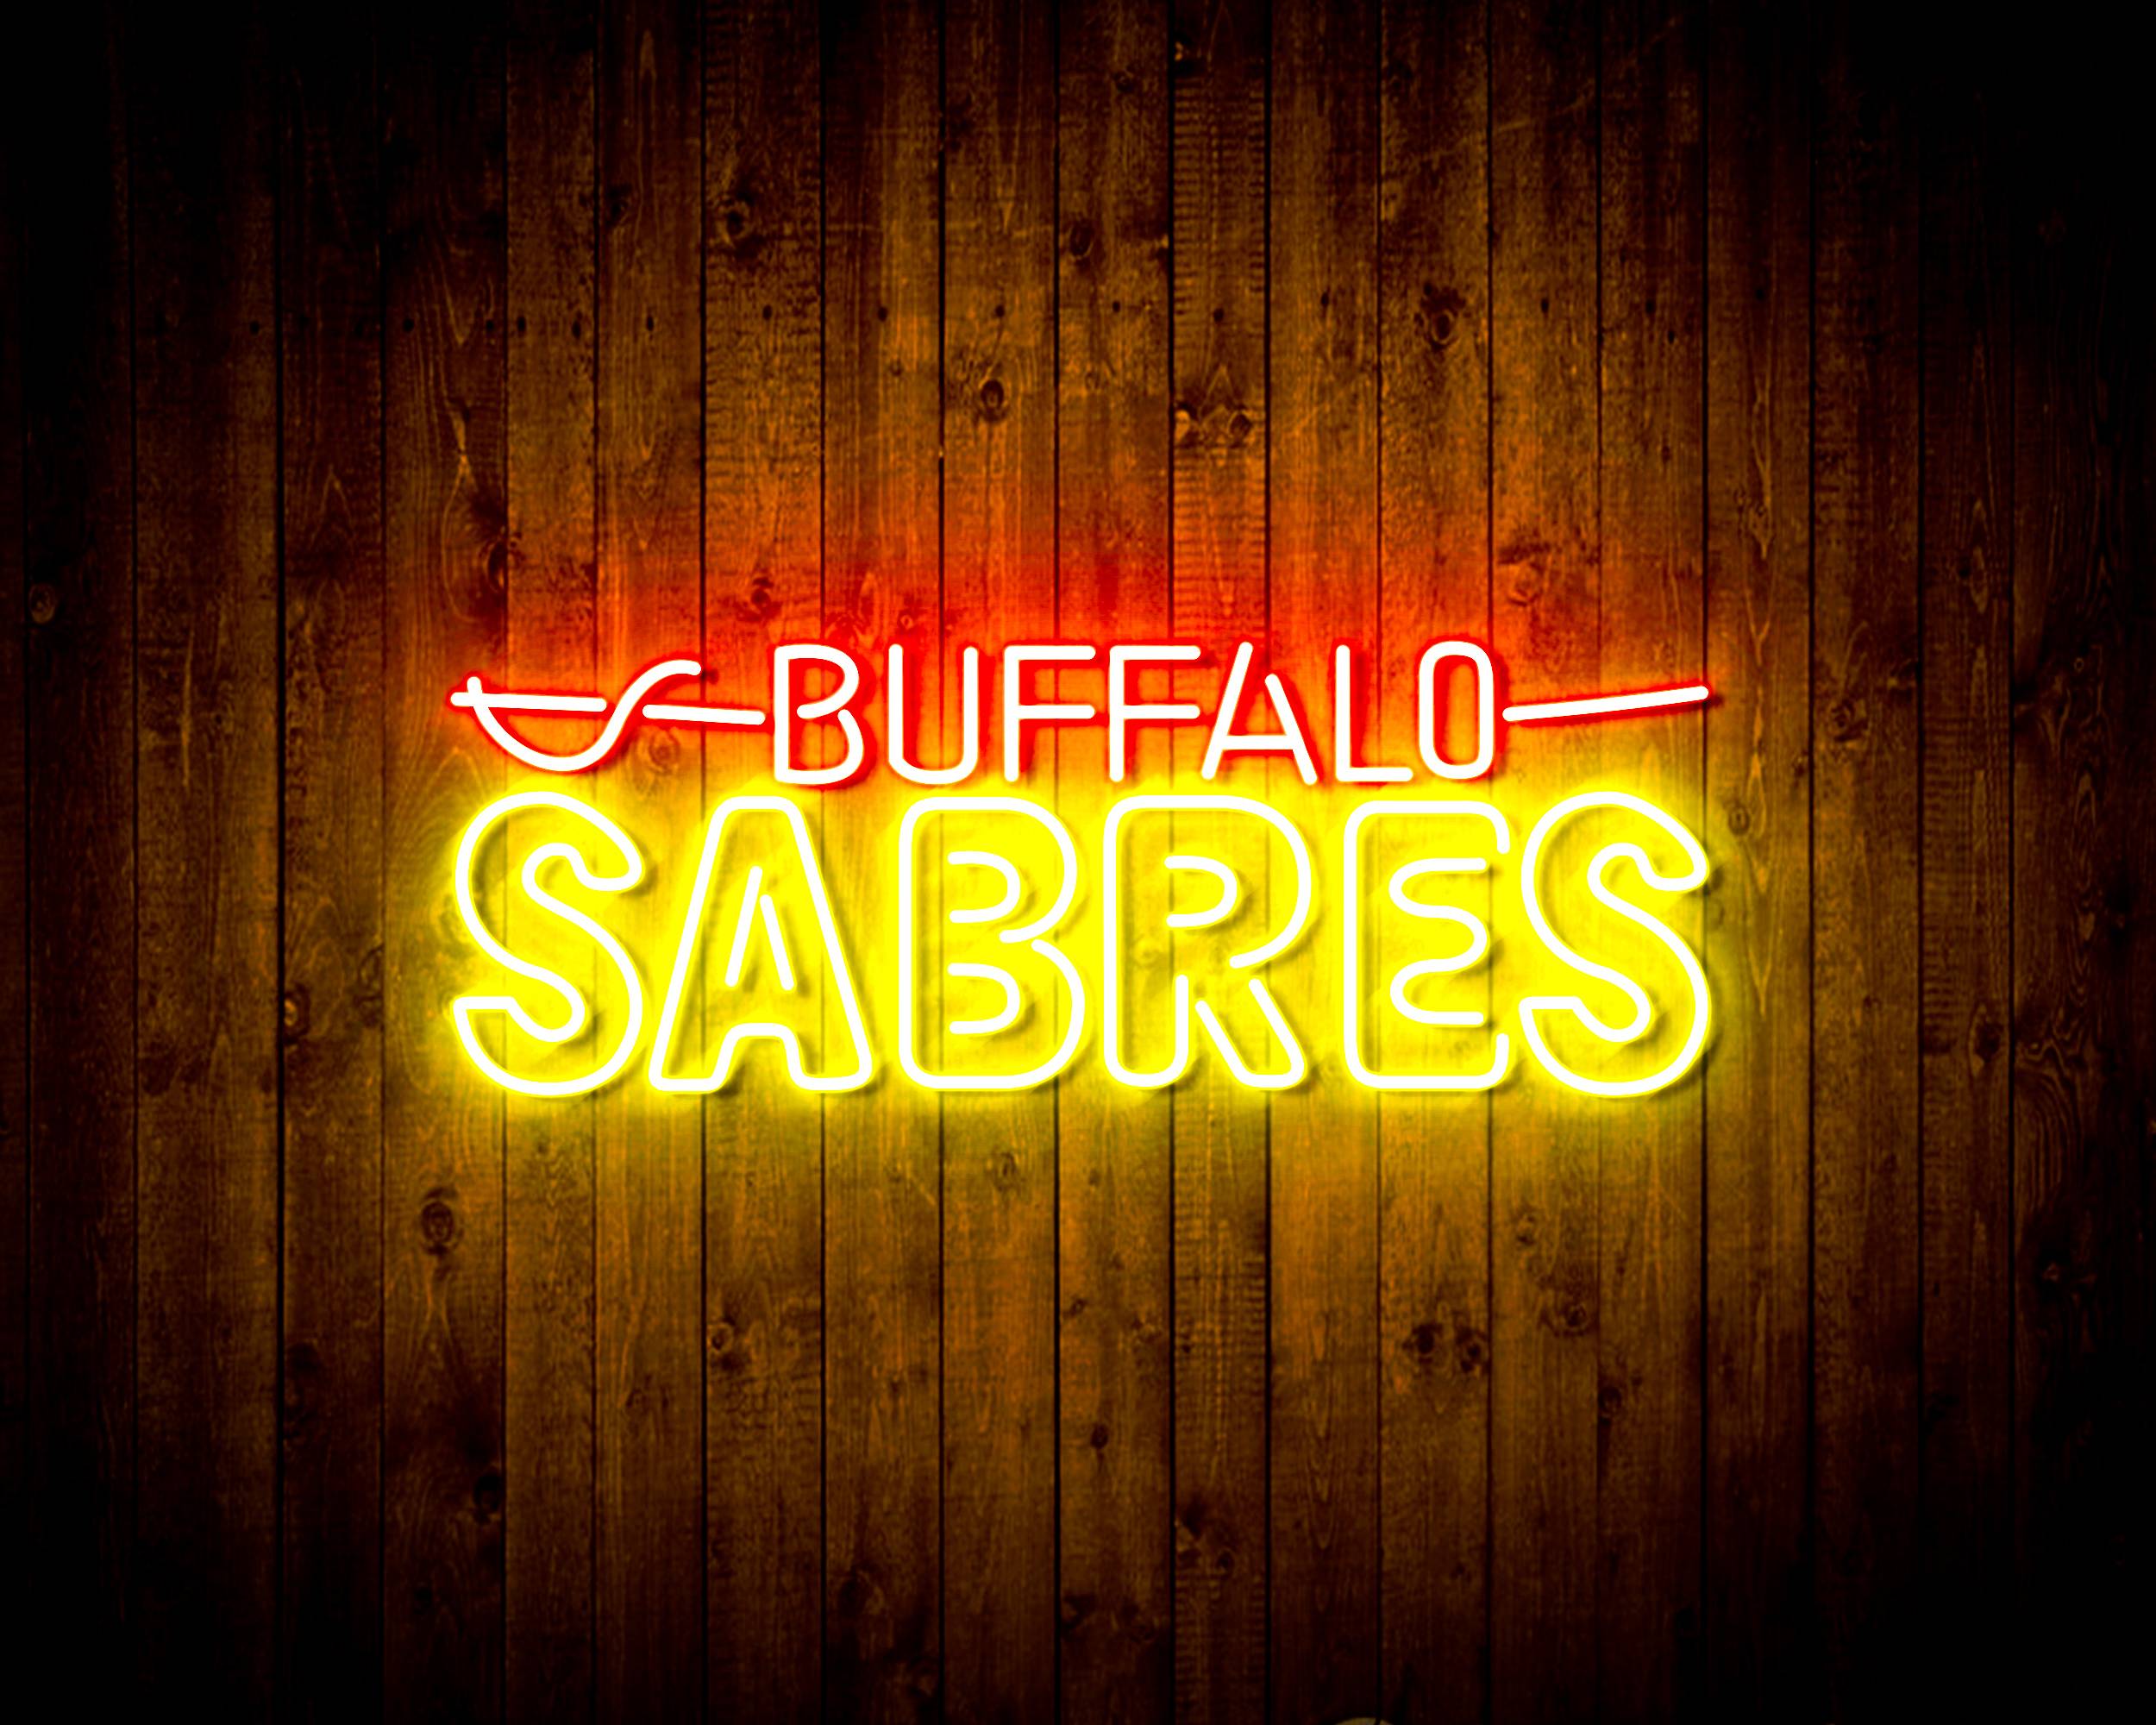 NHL Buffalo Sabres Handmade LED Neon Light Sign